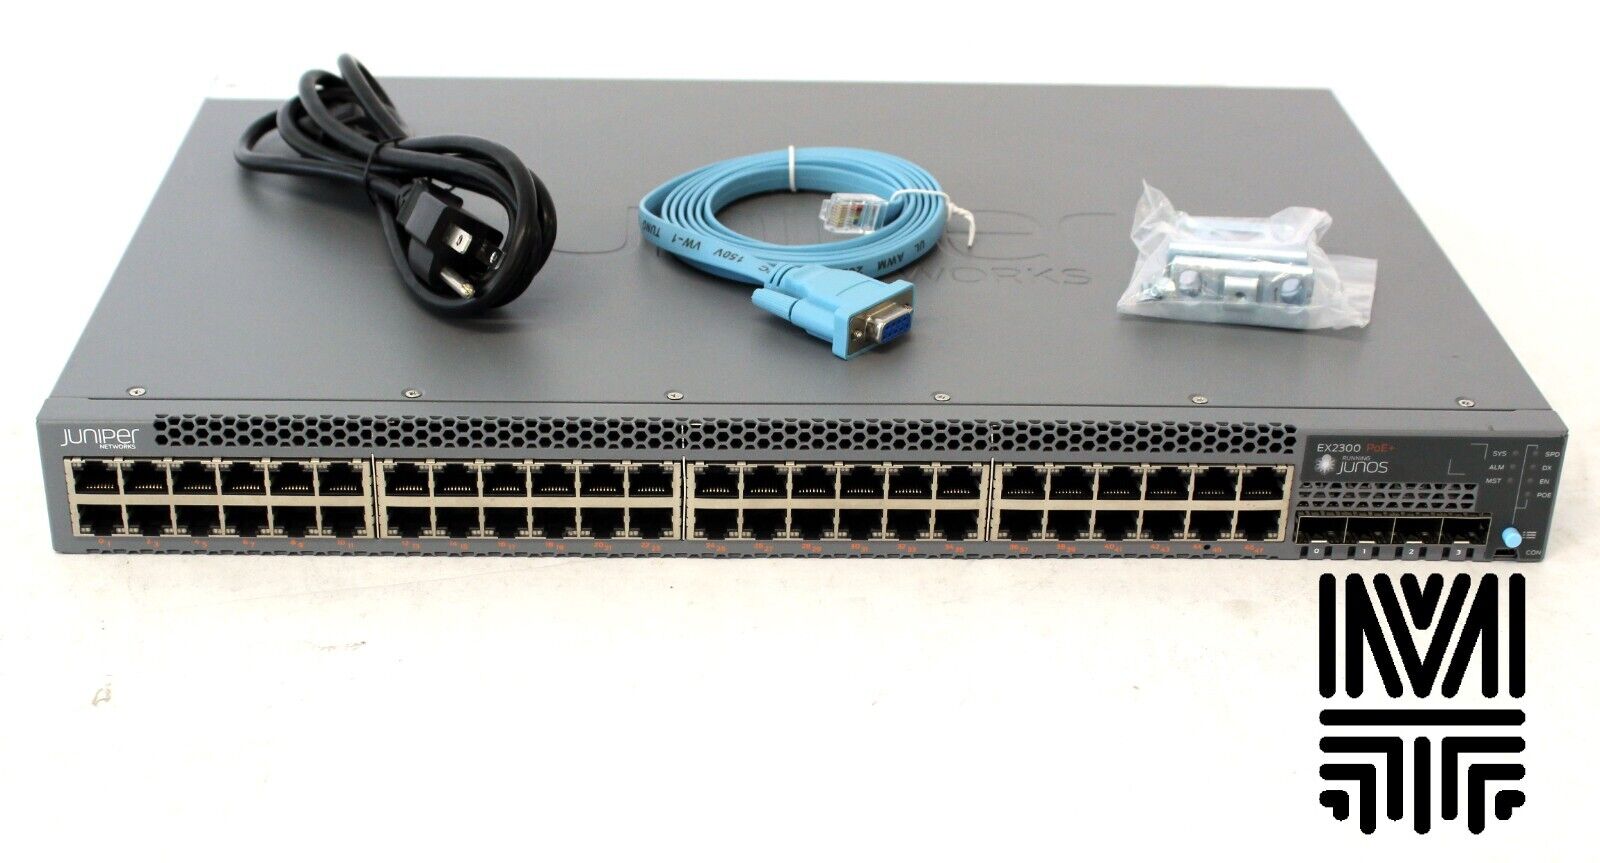 Juniper EX2300-48P  PoE+ Switch 48x 1GbE & 4 SFP+/SFP 10G uplinks, Tested